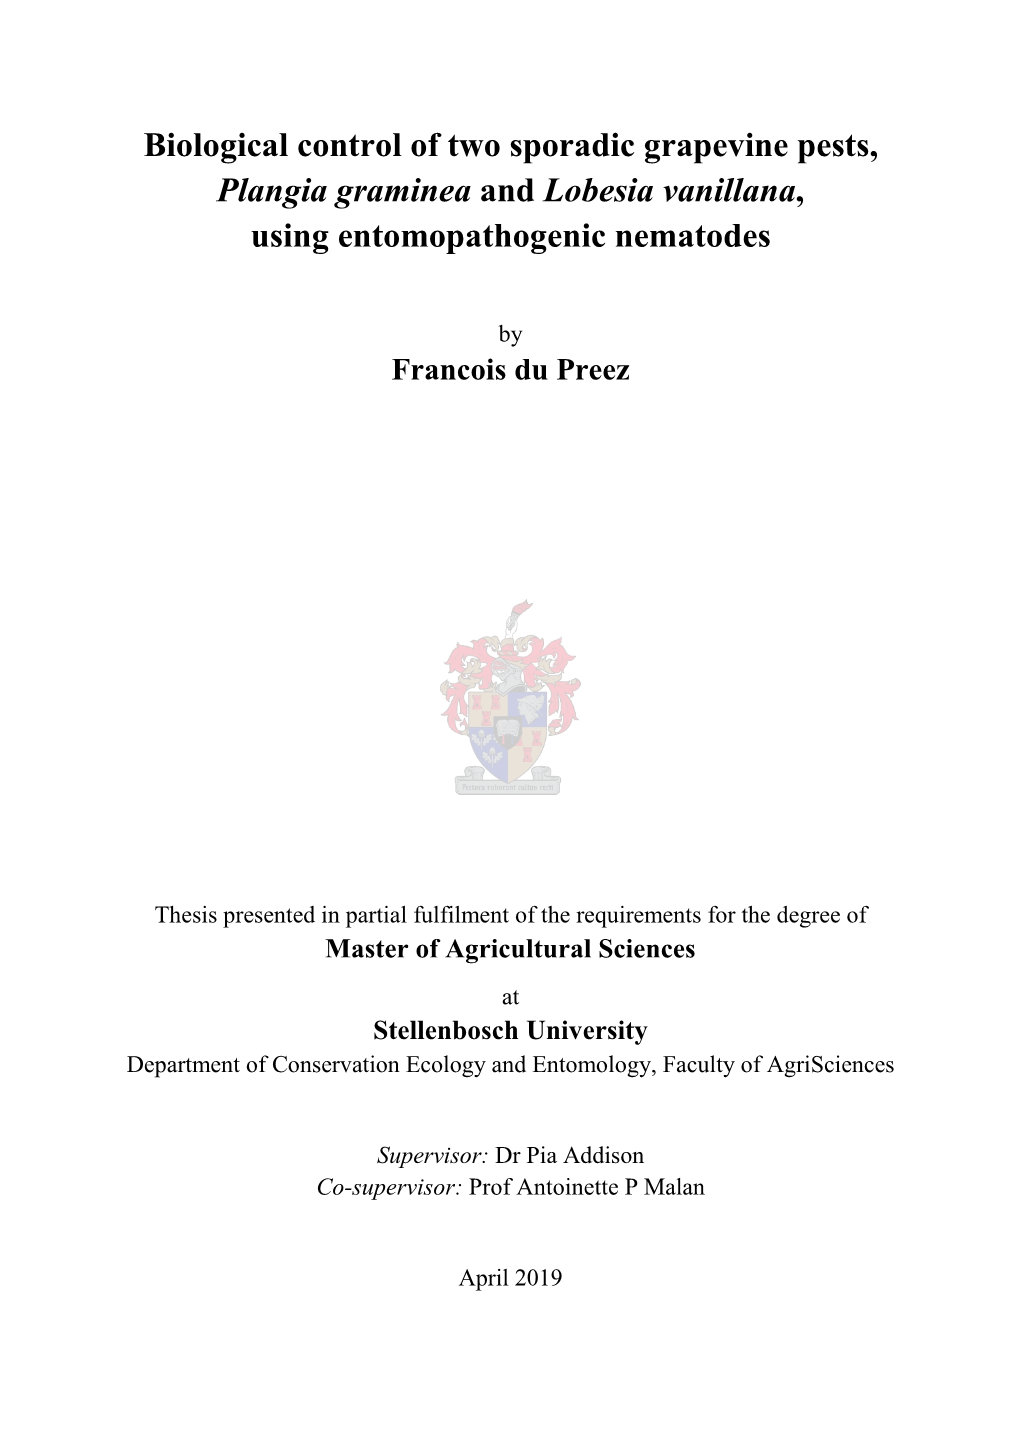 Biological Control of Two Sporadic Grapevine Pests, Plangia Graminea and Lobesia Vanillana, Using Entomopathogenic Nematodes